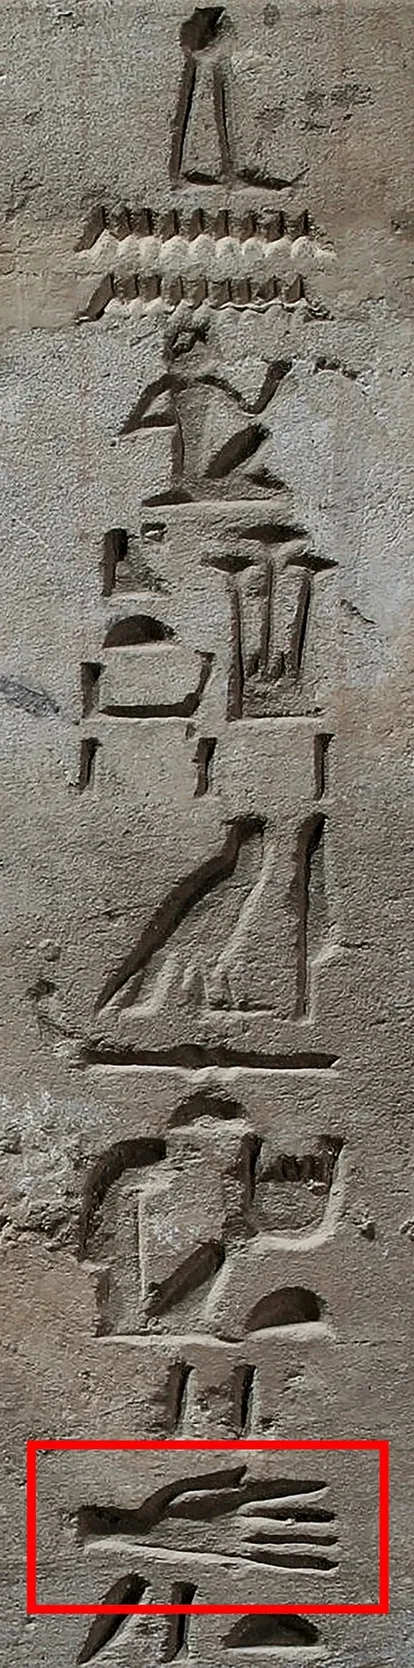 The "cut hand" hieroglyph